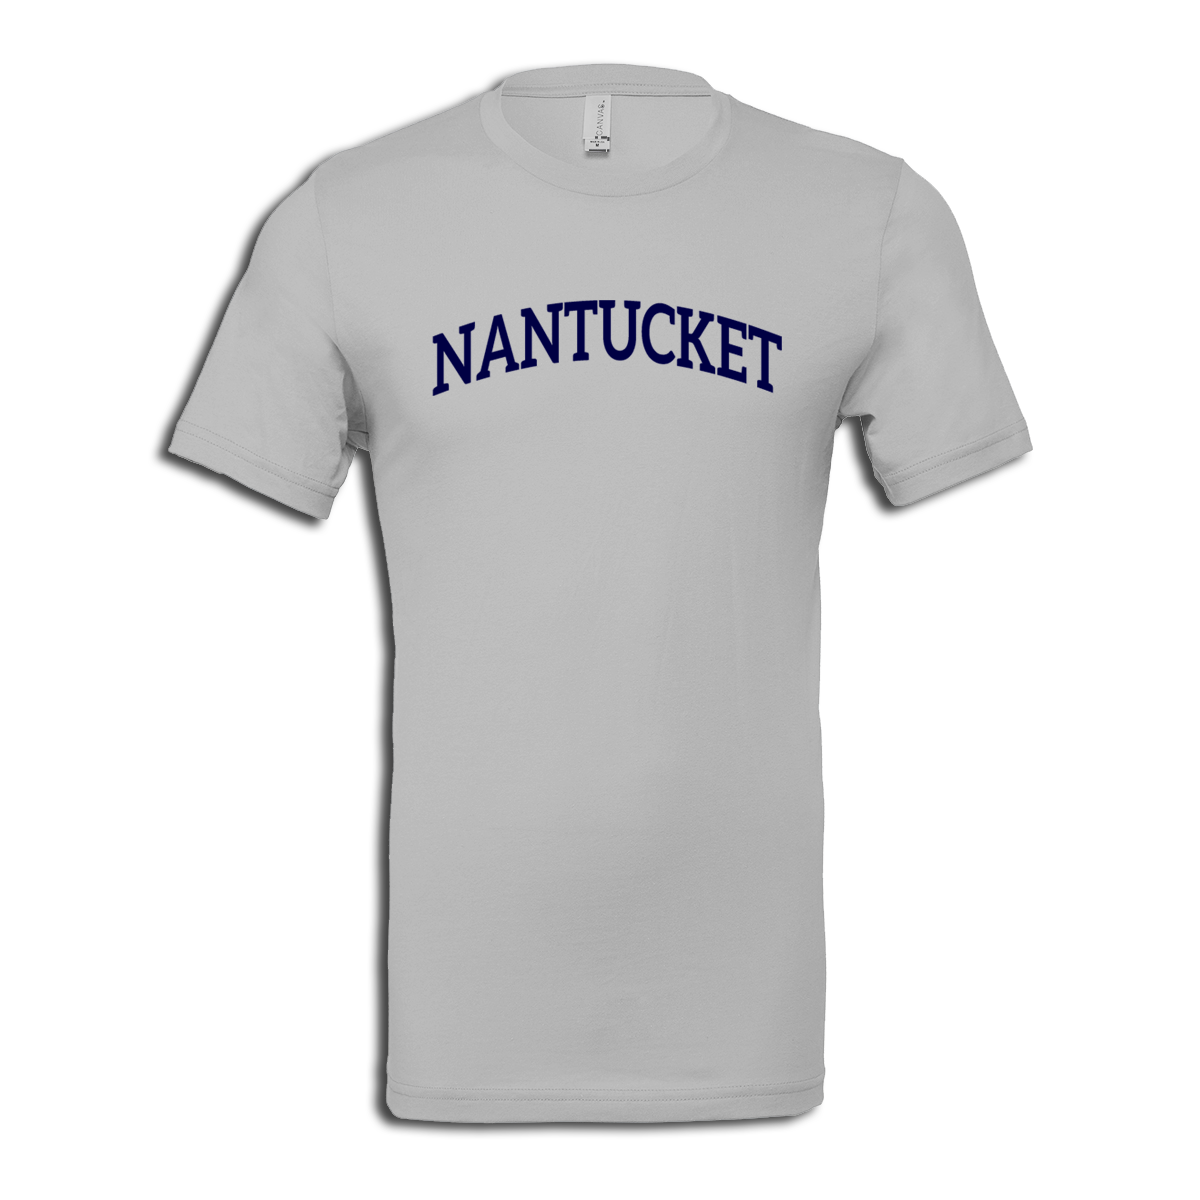 Nantucket Arch Short Sleeve Tee Shirt Grey